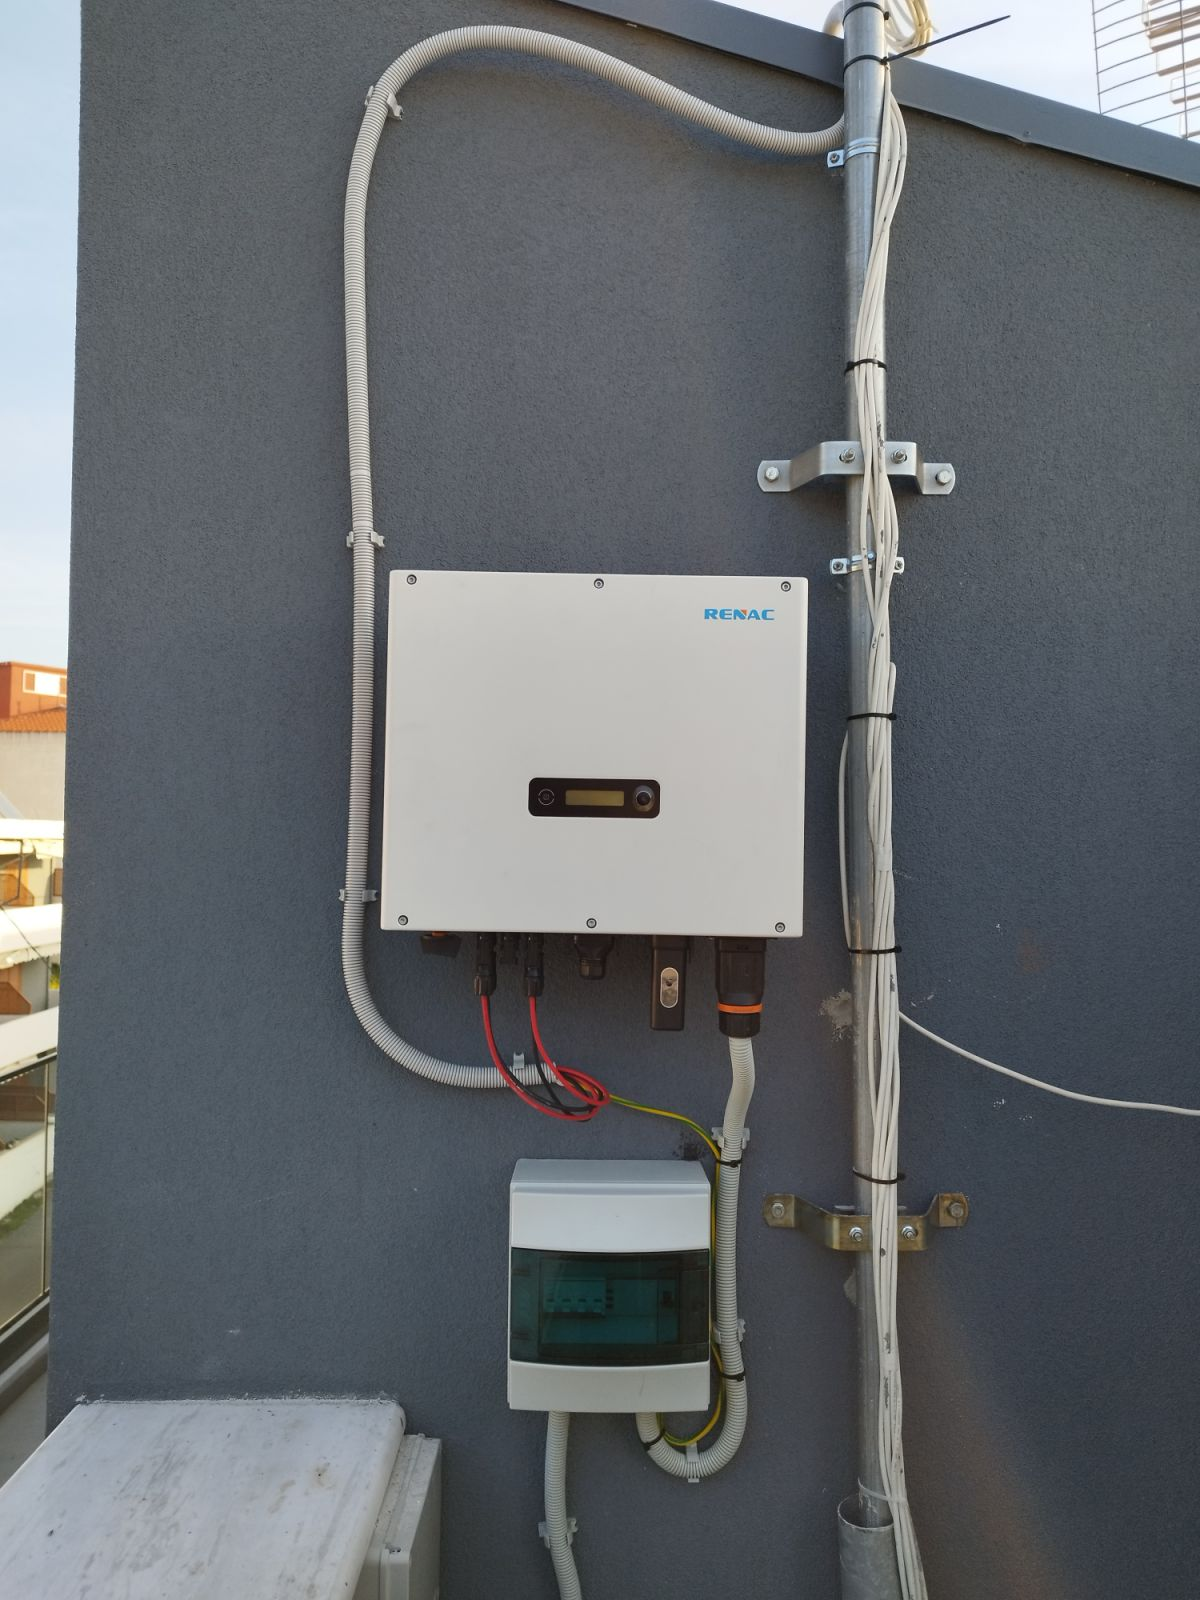 New ecosun home net metering project 12 kW Καβάλα